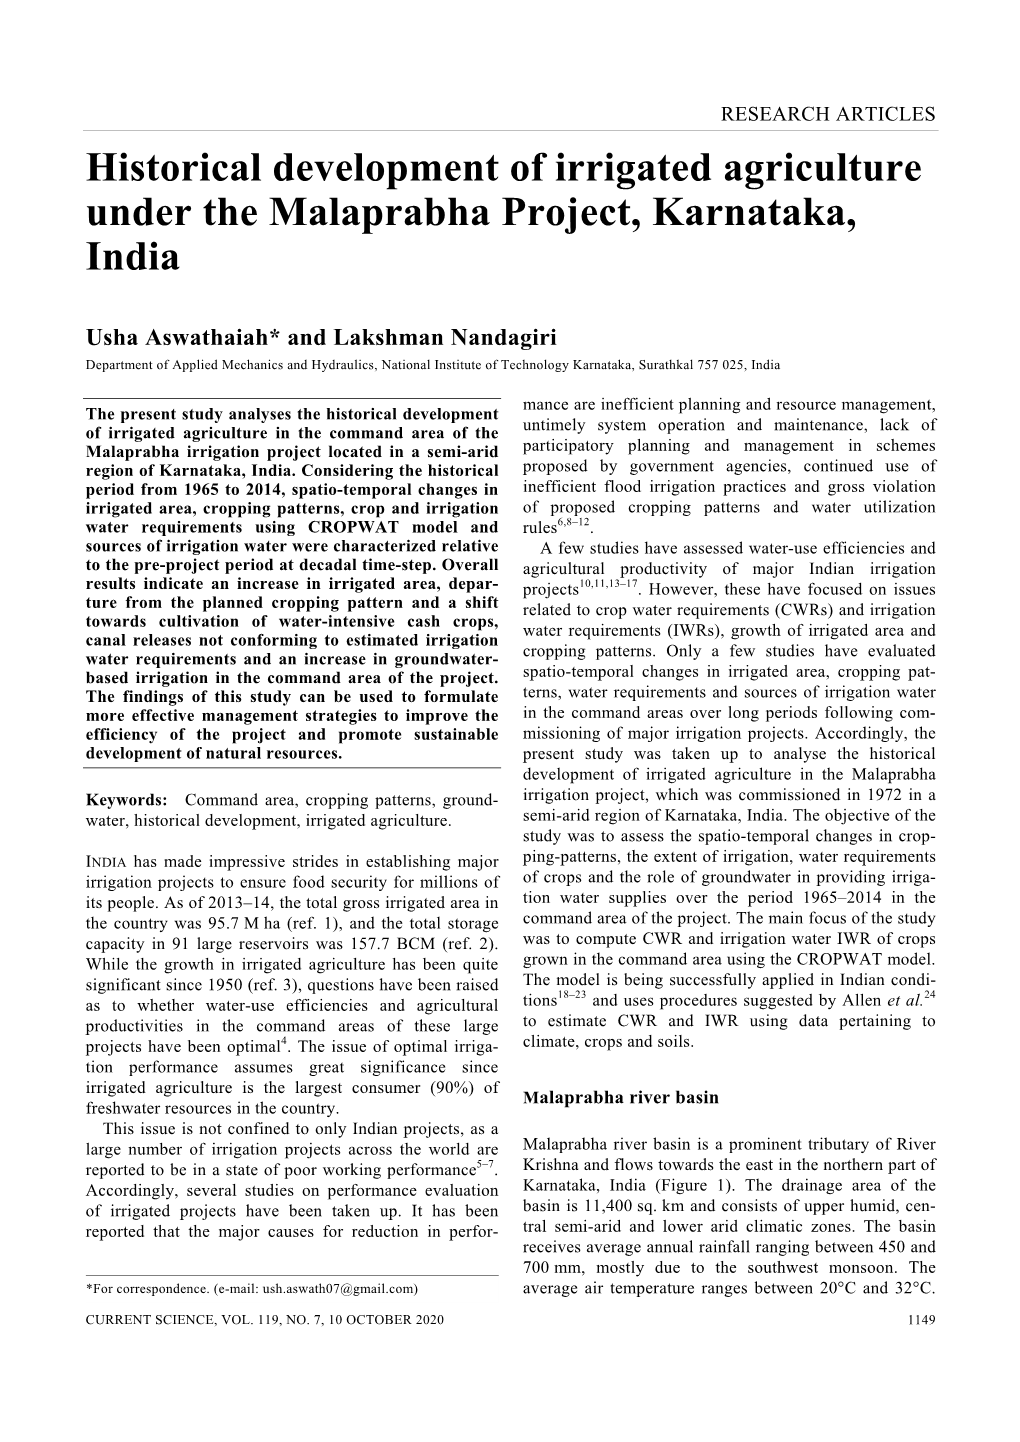 Historical Development of Irrigated Agriculture Under the Malaprabha Project, Karnataka, India